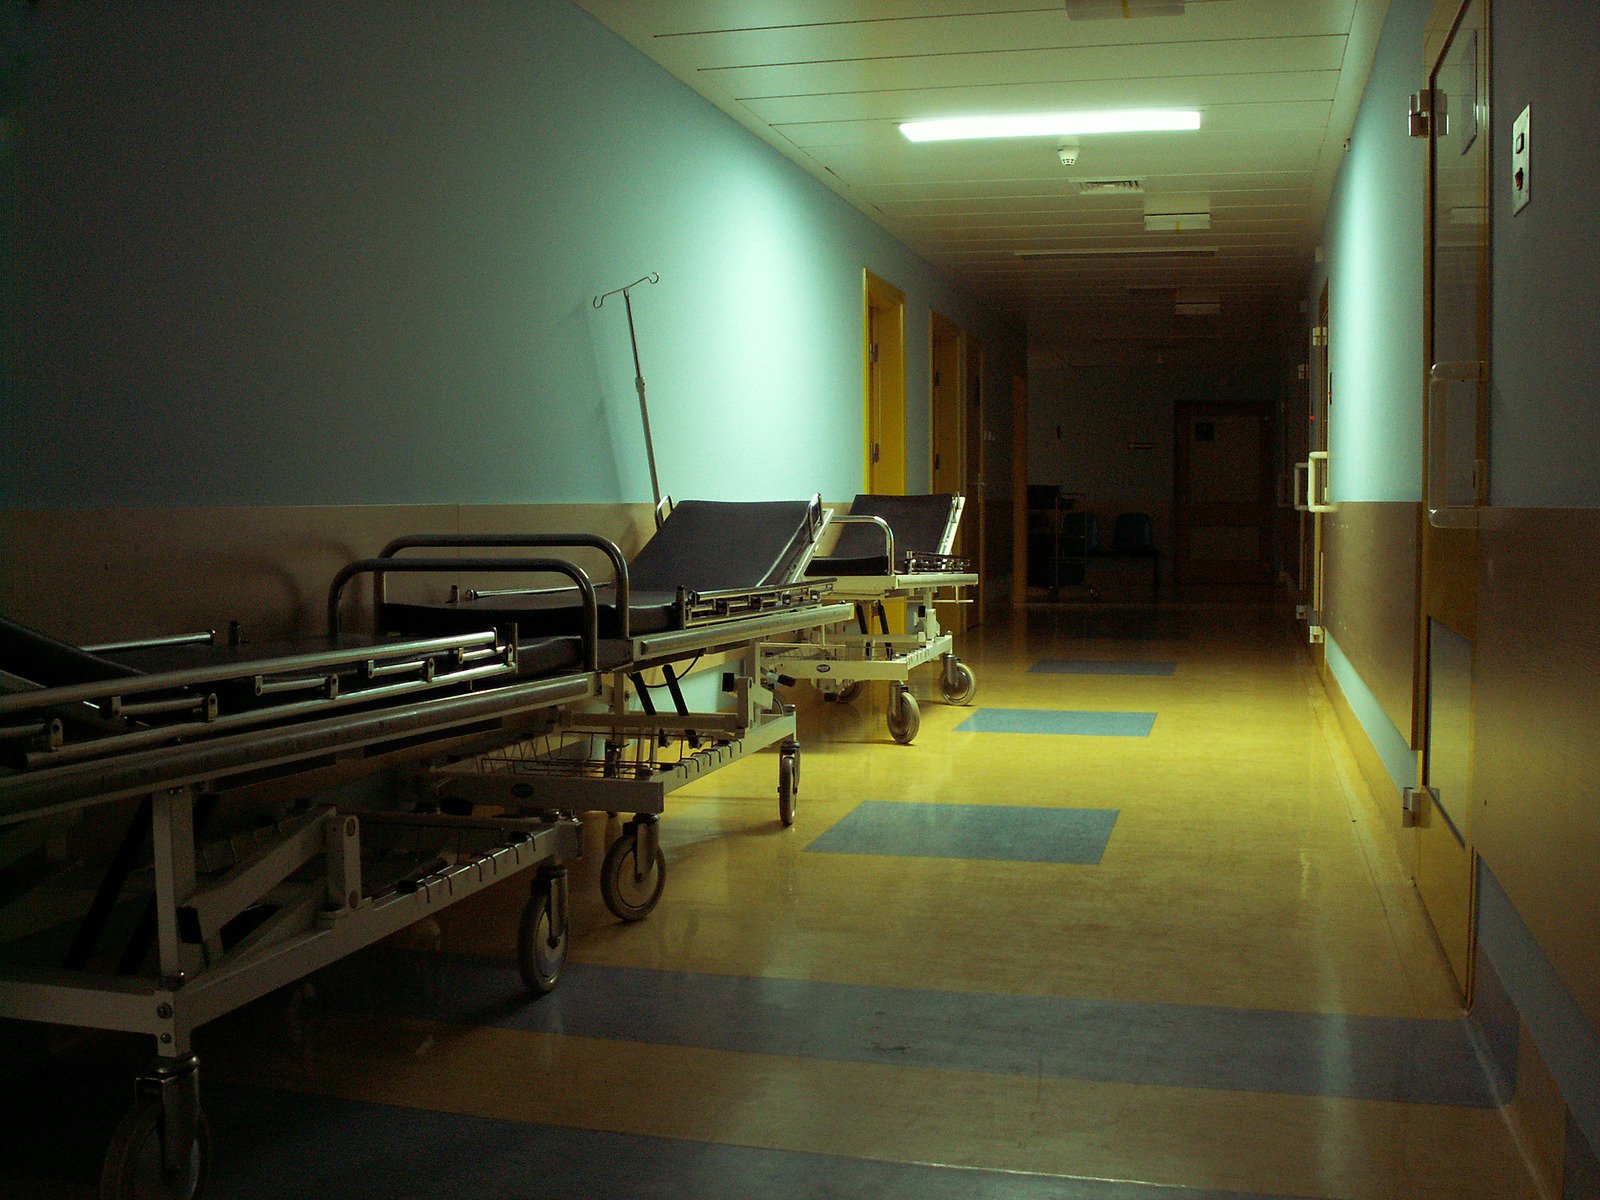 Hallway in hospital